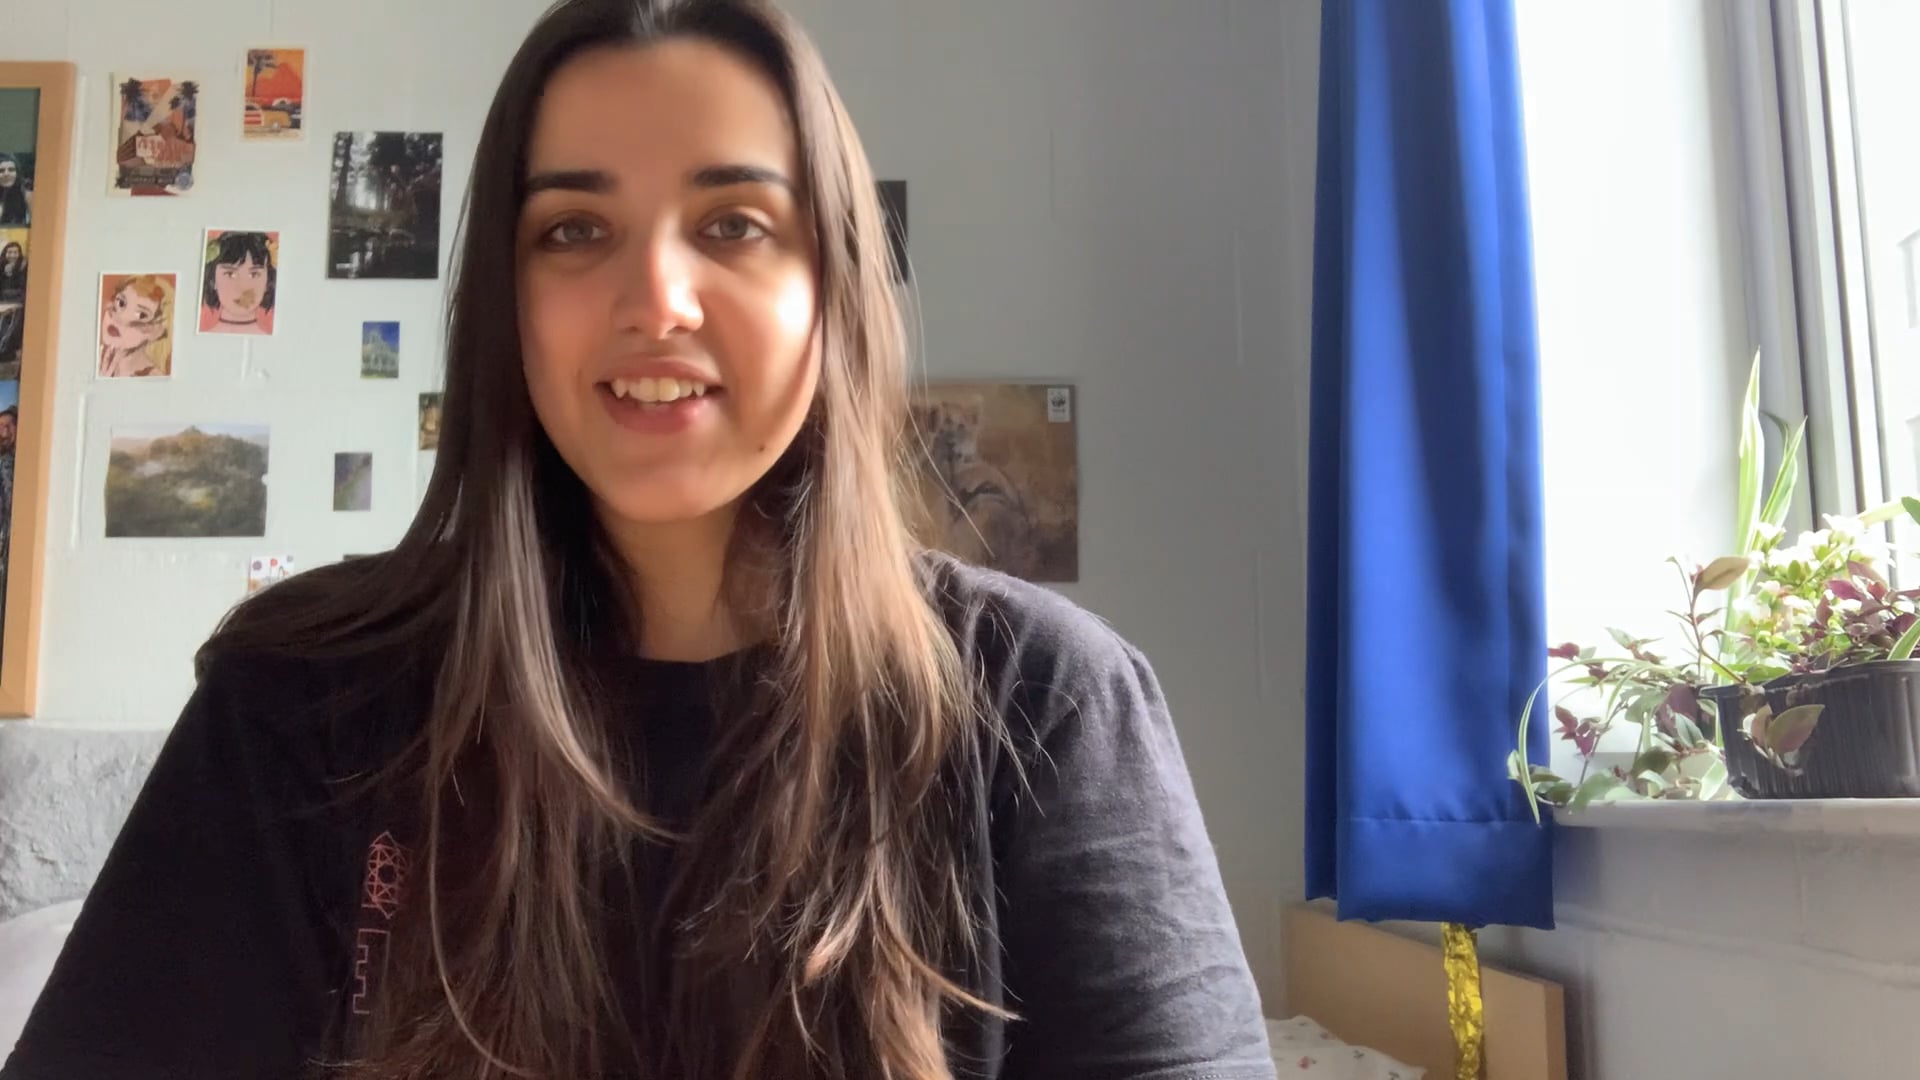 Victoria M. tutor video introduction on Preply on Vimeo